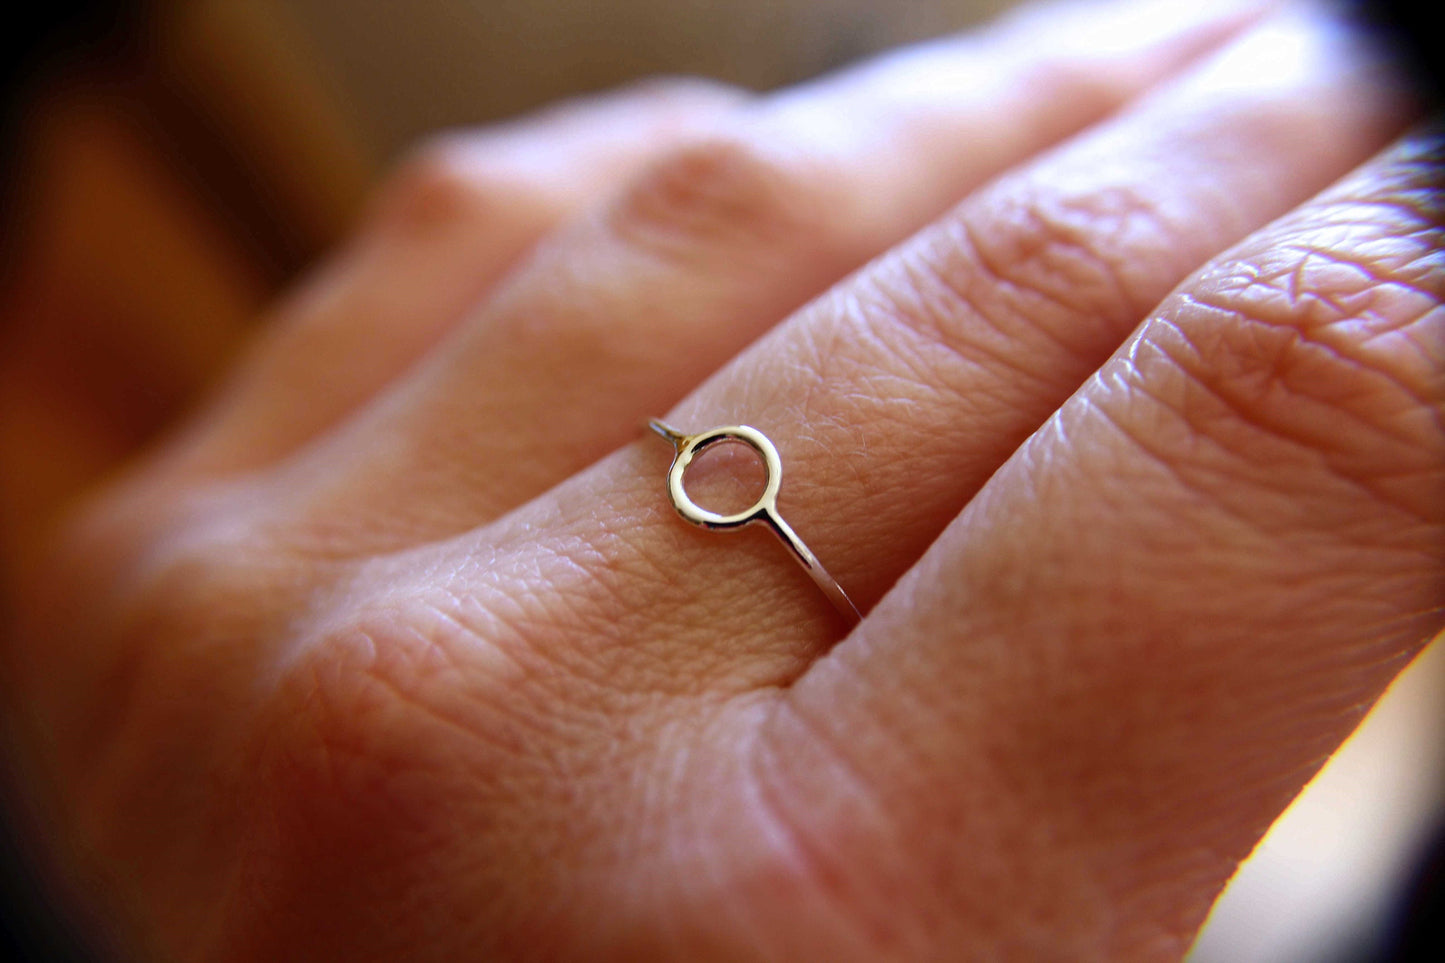 Circle Ring, Stacking Rings, Eternity Rings, Silver/Gold Circle Rings,Simple Modern Rings, Karma Circle Ring, Minimalist Jewelry, Karma Ring